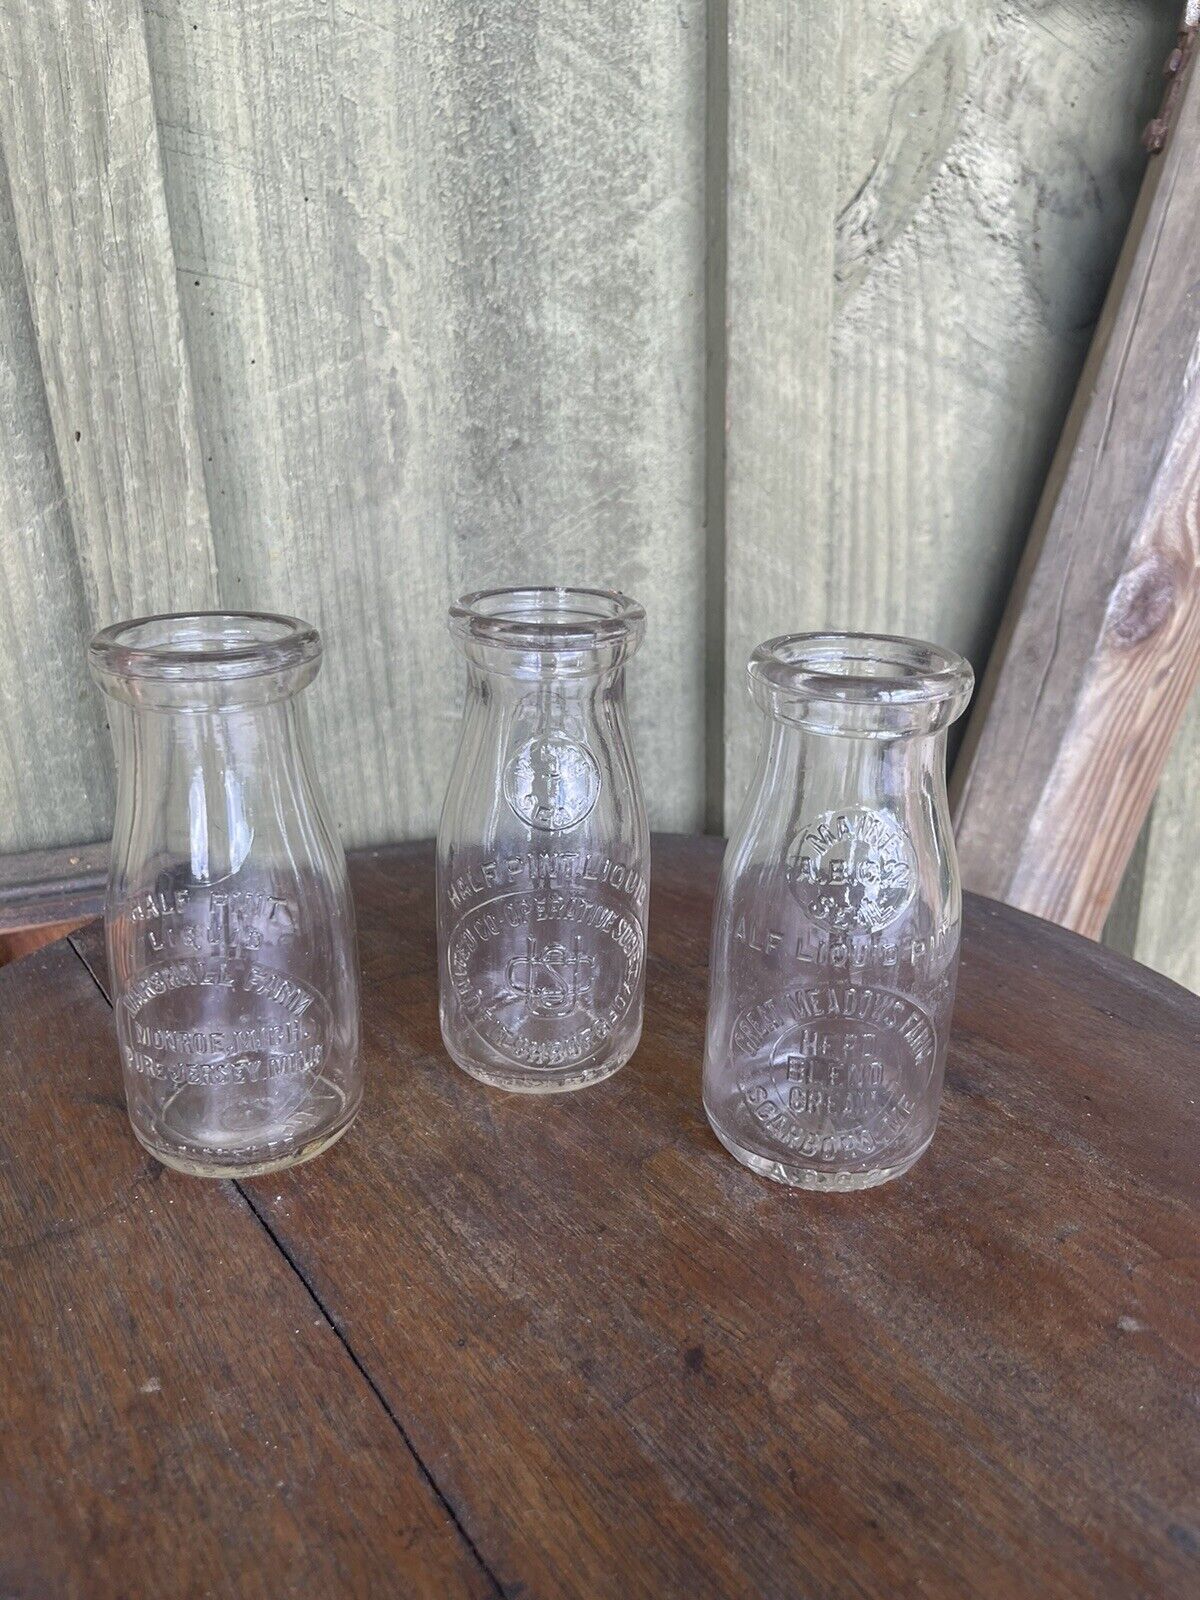 Three Antique Milk Bottles From Maine, Michigan, and Massachusetts